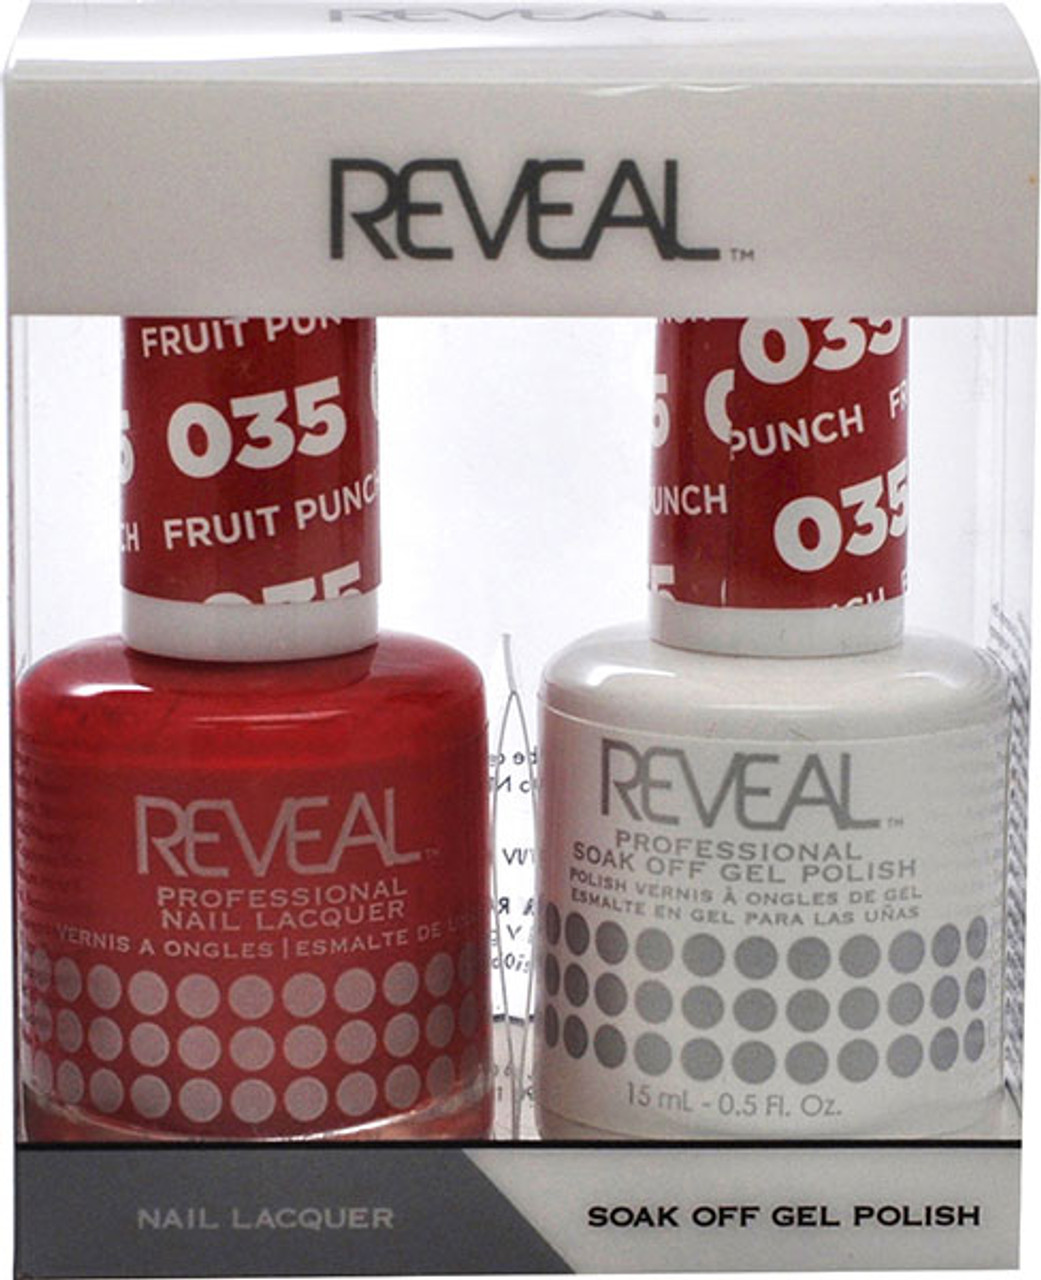 Reveal Gel Polish & Nail Lacquer Matching Duo - FRUIT PUNCH - .5 oz